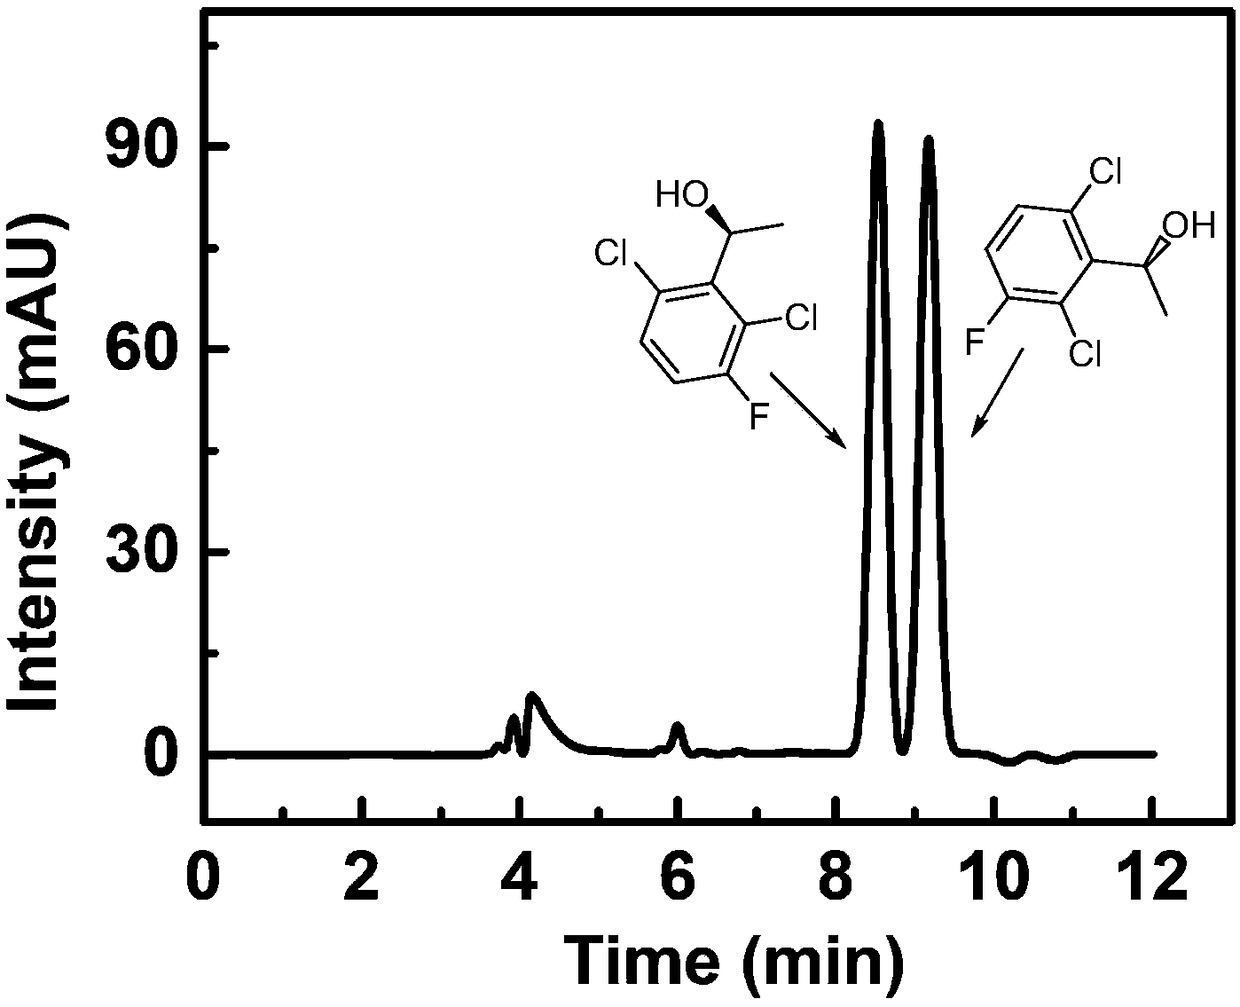 Method for synthesizing (S)-1-1(2,6-dichloro-3-fluorine-phenyl) ethanol through immobilized bienzyme catalysis